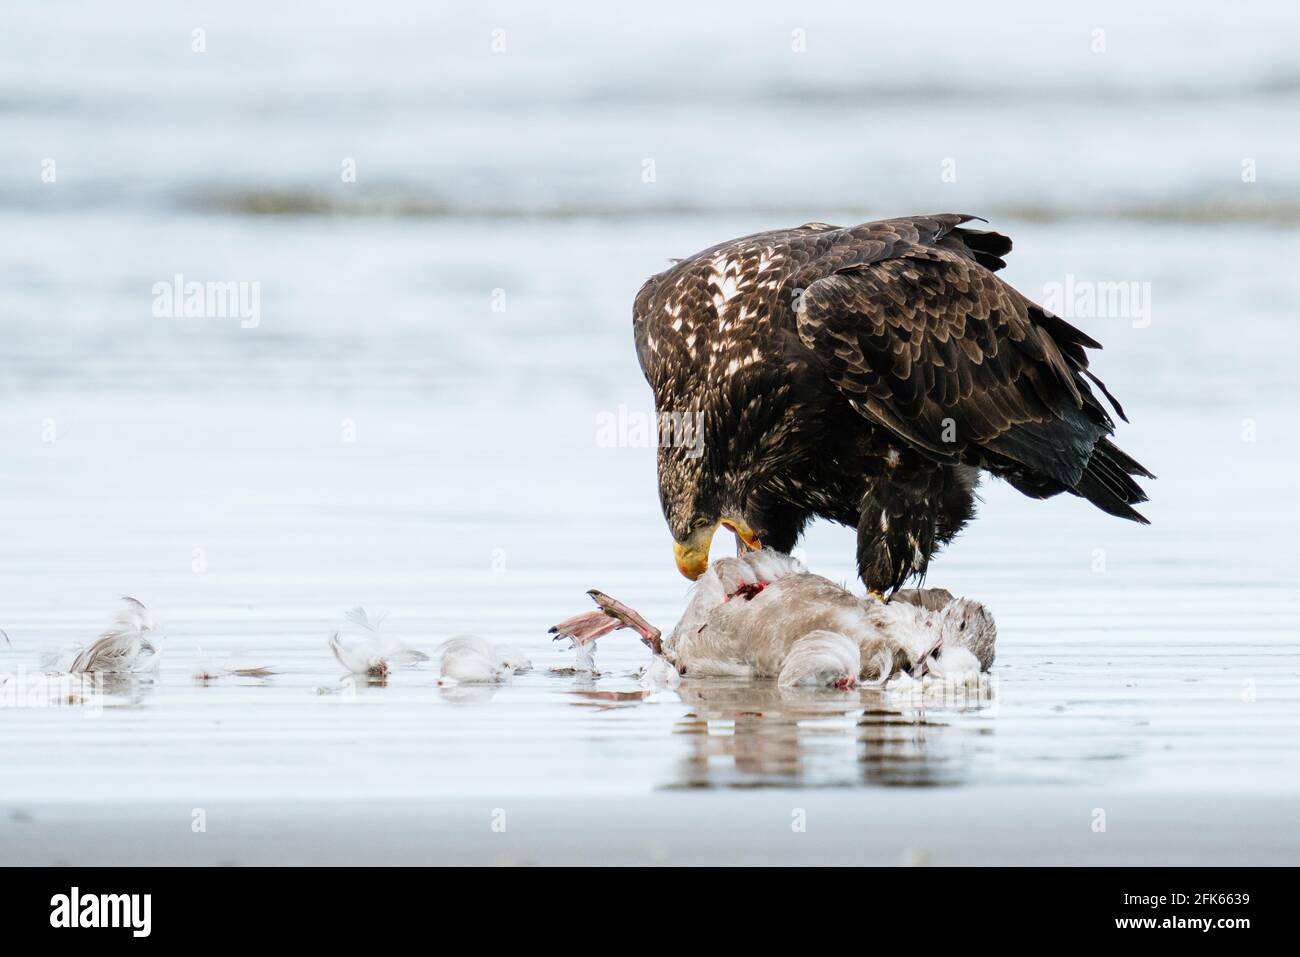 A young bald eagle eating a sea gull on an ocean beach Stock Photo